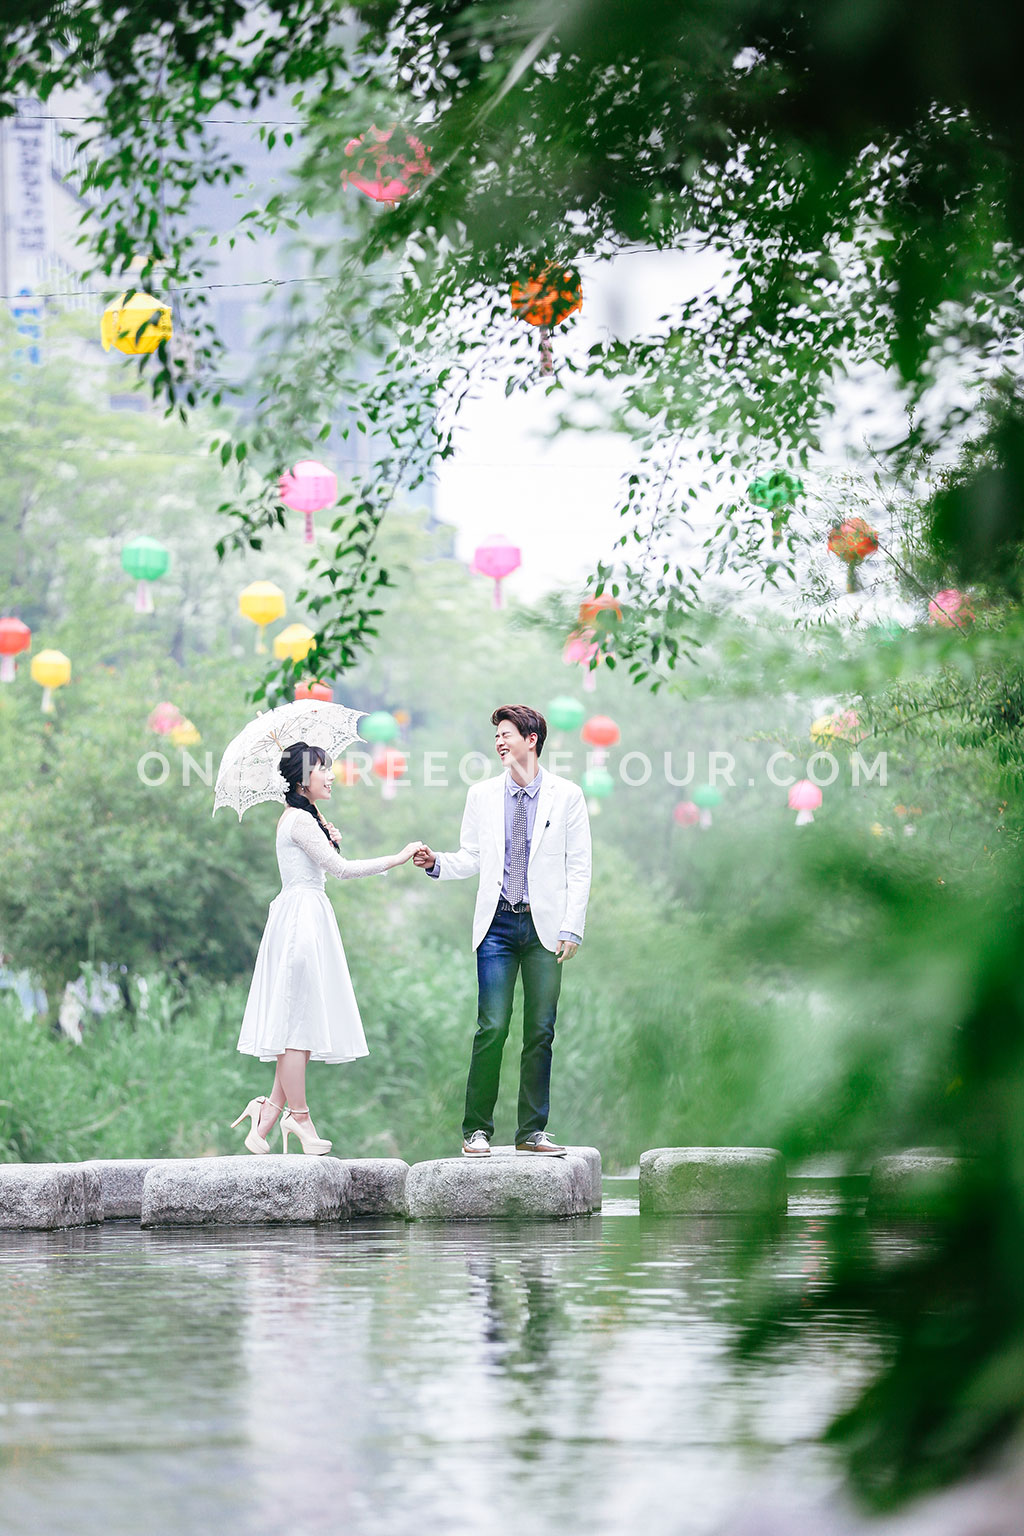 Korean Studio Pre-Wedding Photography: Han River, Insadong, Bukchon Hanok Village (Outdoor) by The Face Studio on OneThreeOneFour 20